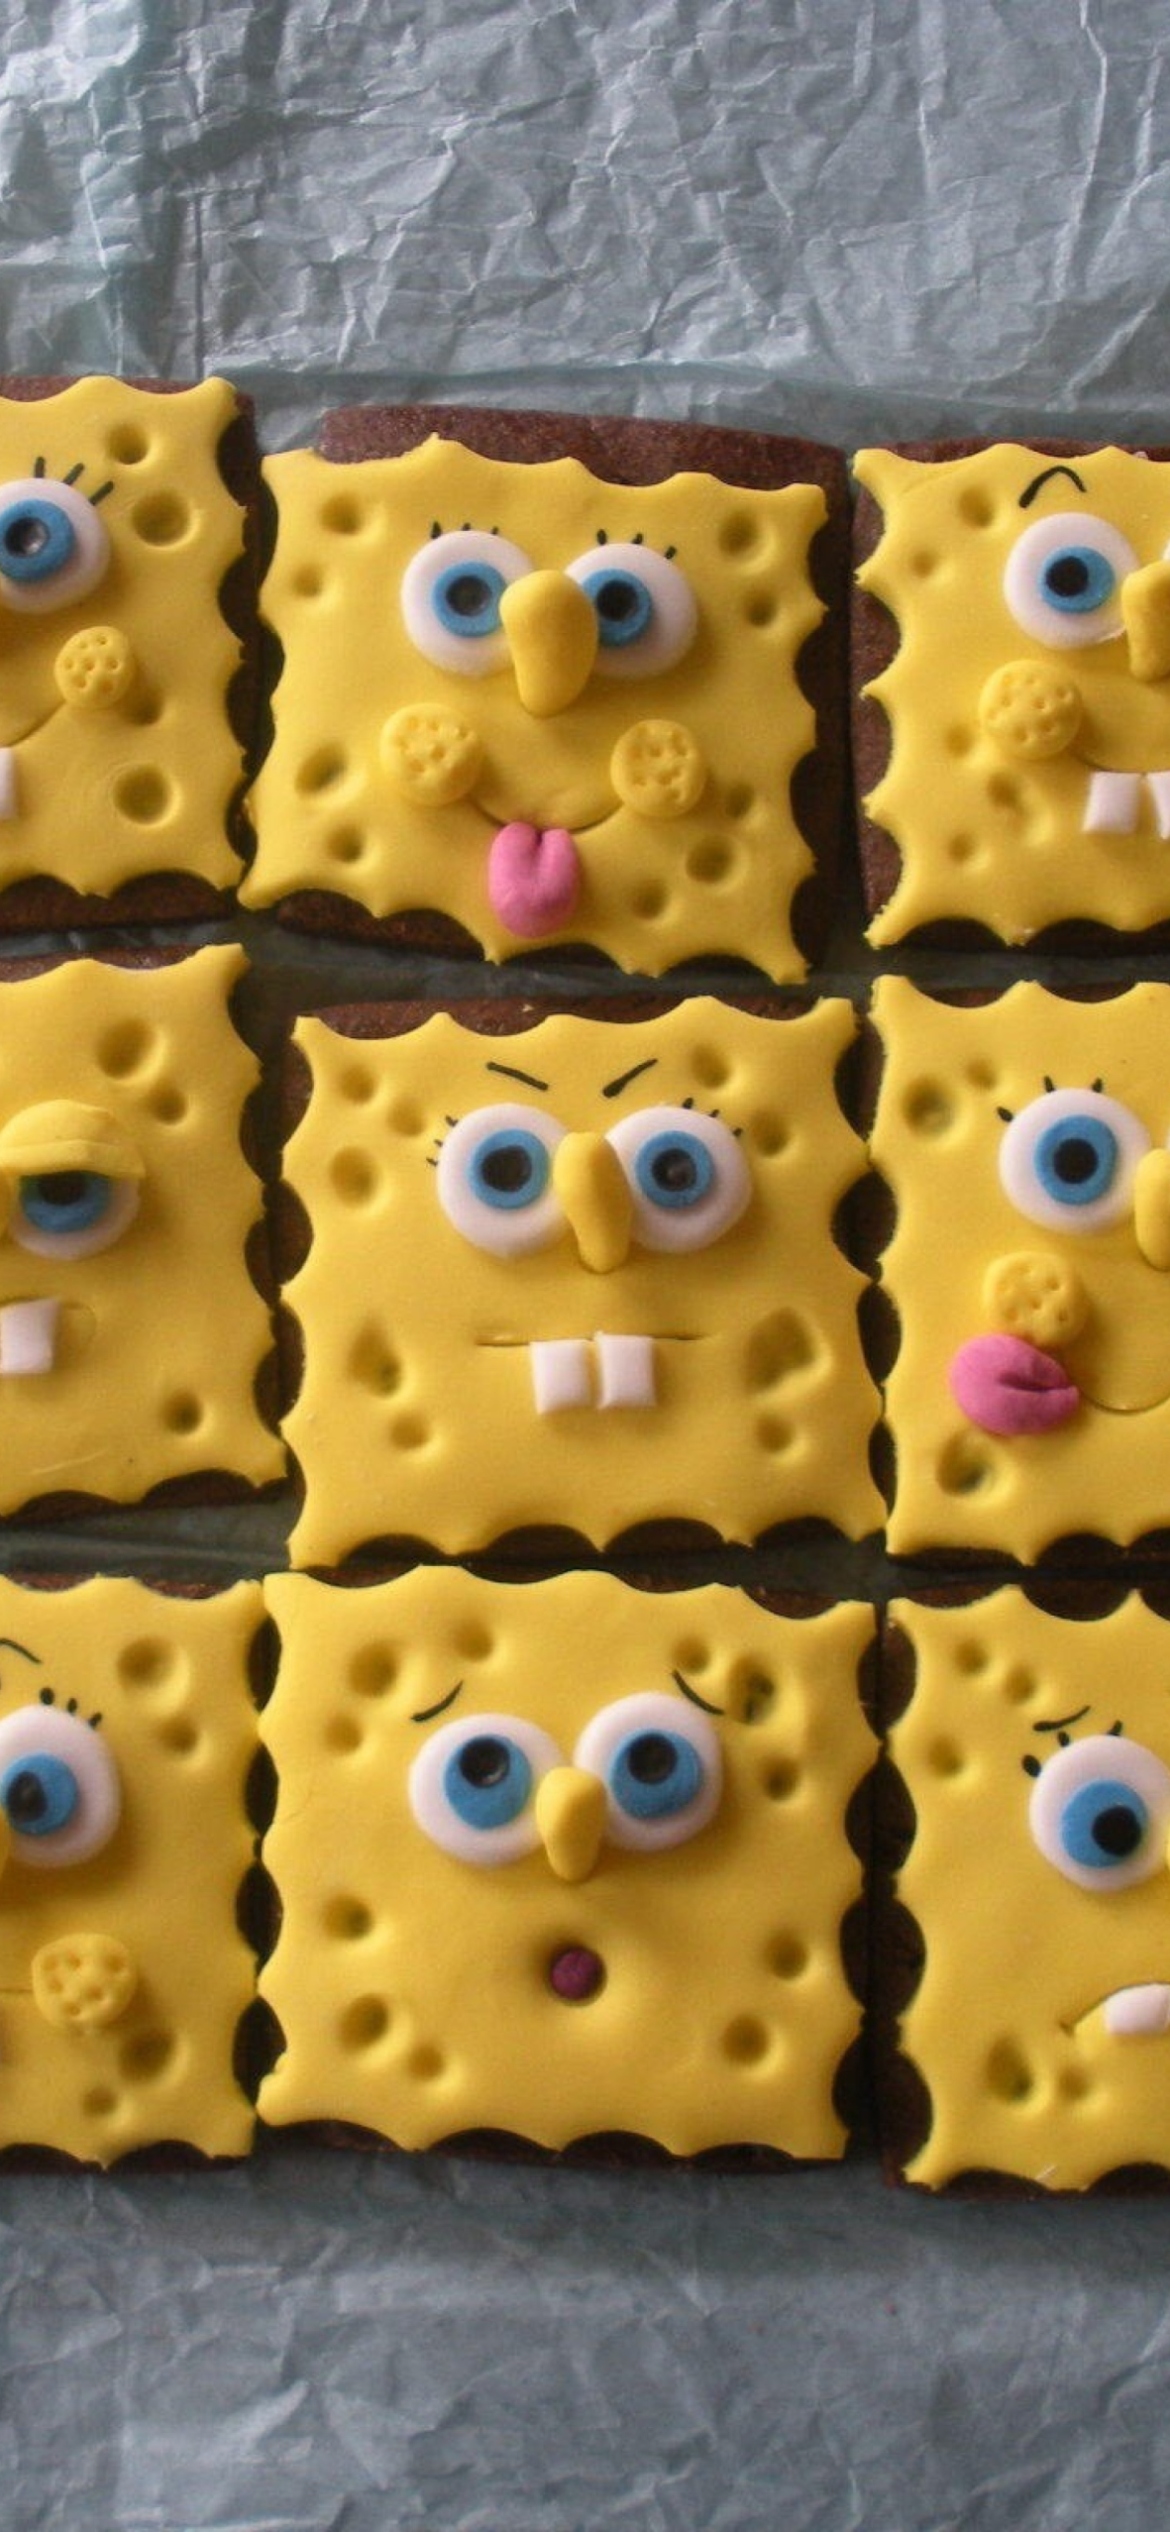 Обои Spongebop Squarepants Cookies 1170x2532